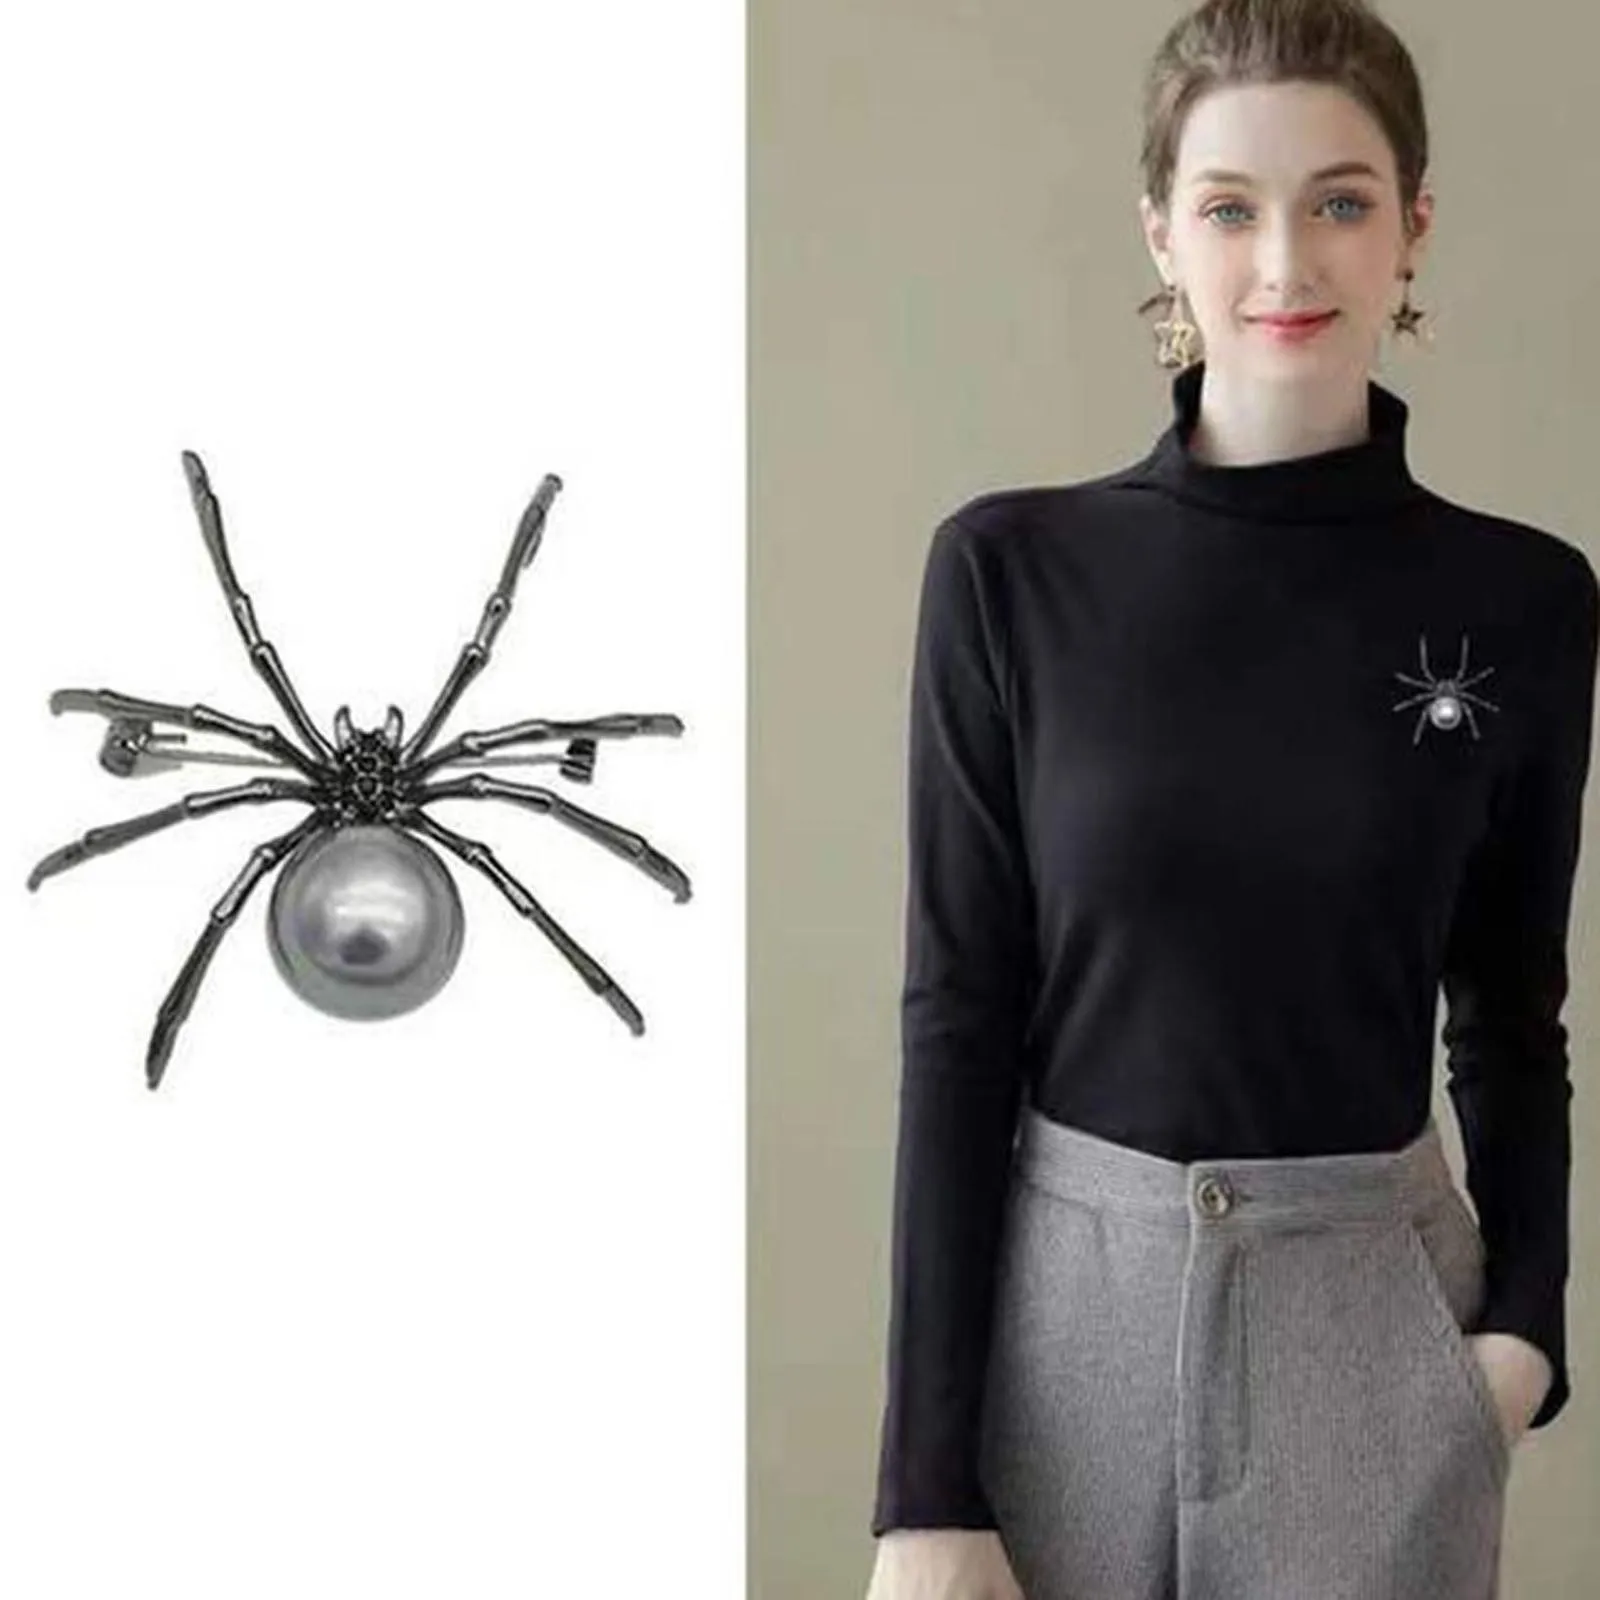 Halloween Women's Imitation Pearl Brooch, Body And Micro Pave Spider, Jewelry , Black Women Jewelry Accessory значки на портфель